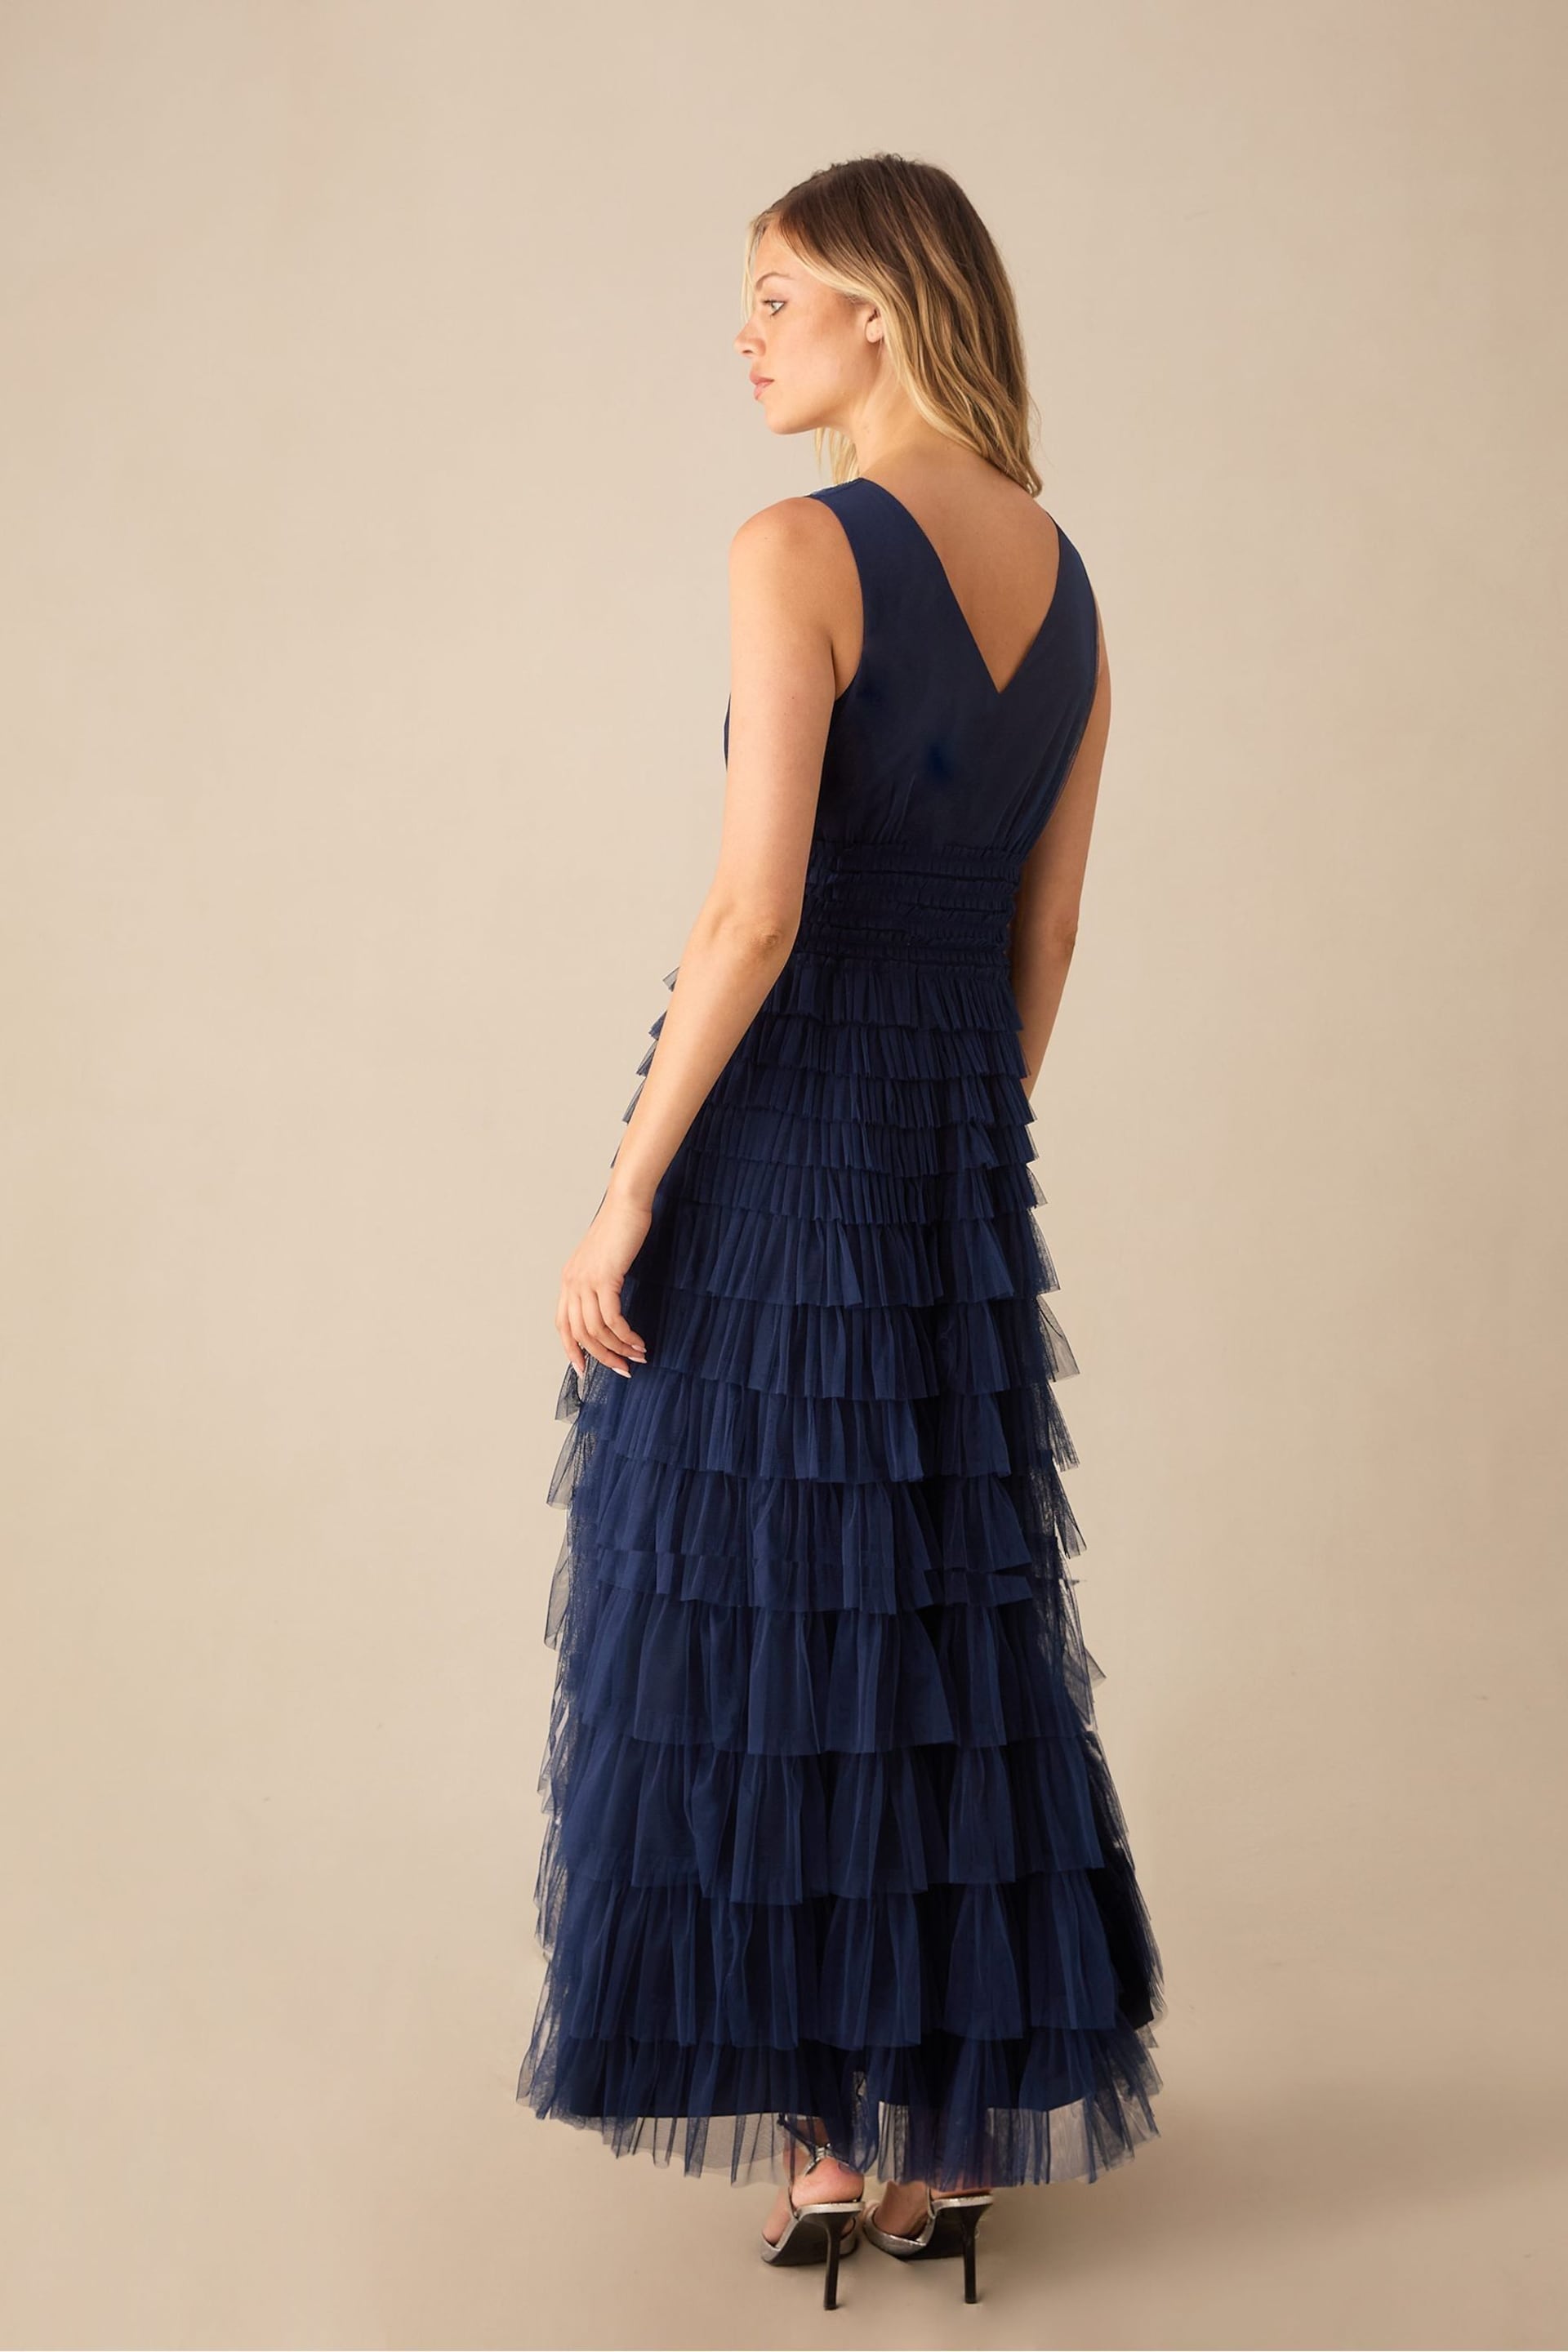 Ro&Zo Anoushka Navy Blue Tulle Tiered Maxi Dress - Image 5 of 8